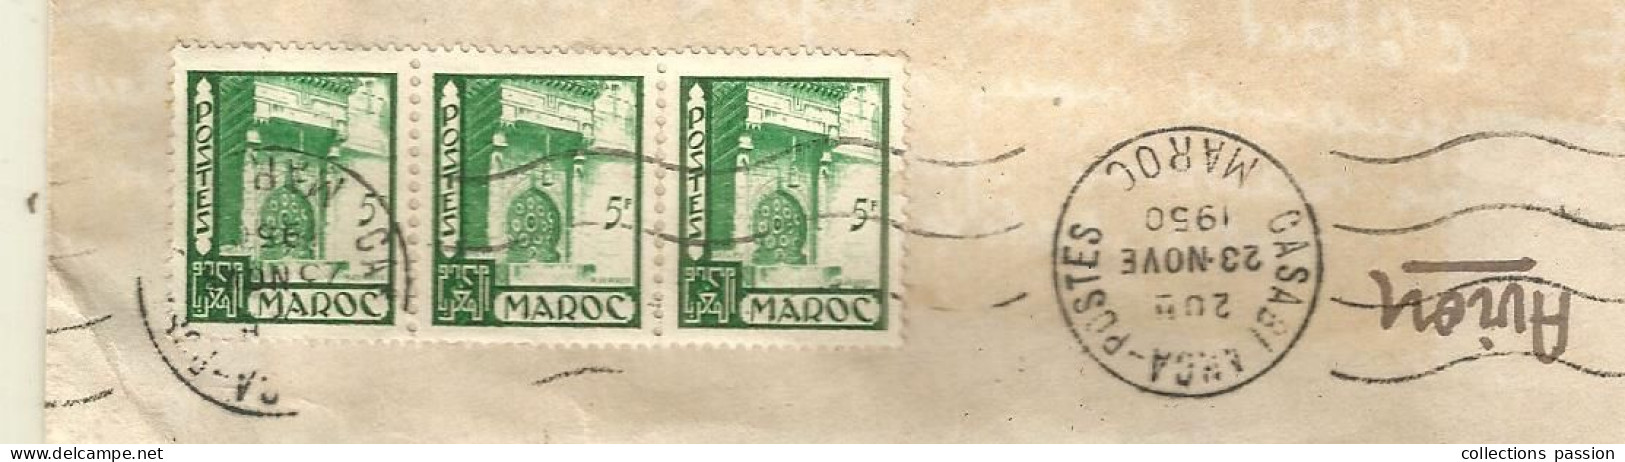 Lettre , CASABLANCA-POSTES, MAROC, 1950, 3 Timbres, 3 Scans, Frais Fr 1.55 E - Maroc (1956-...)